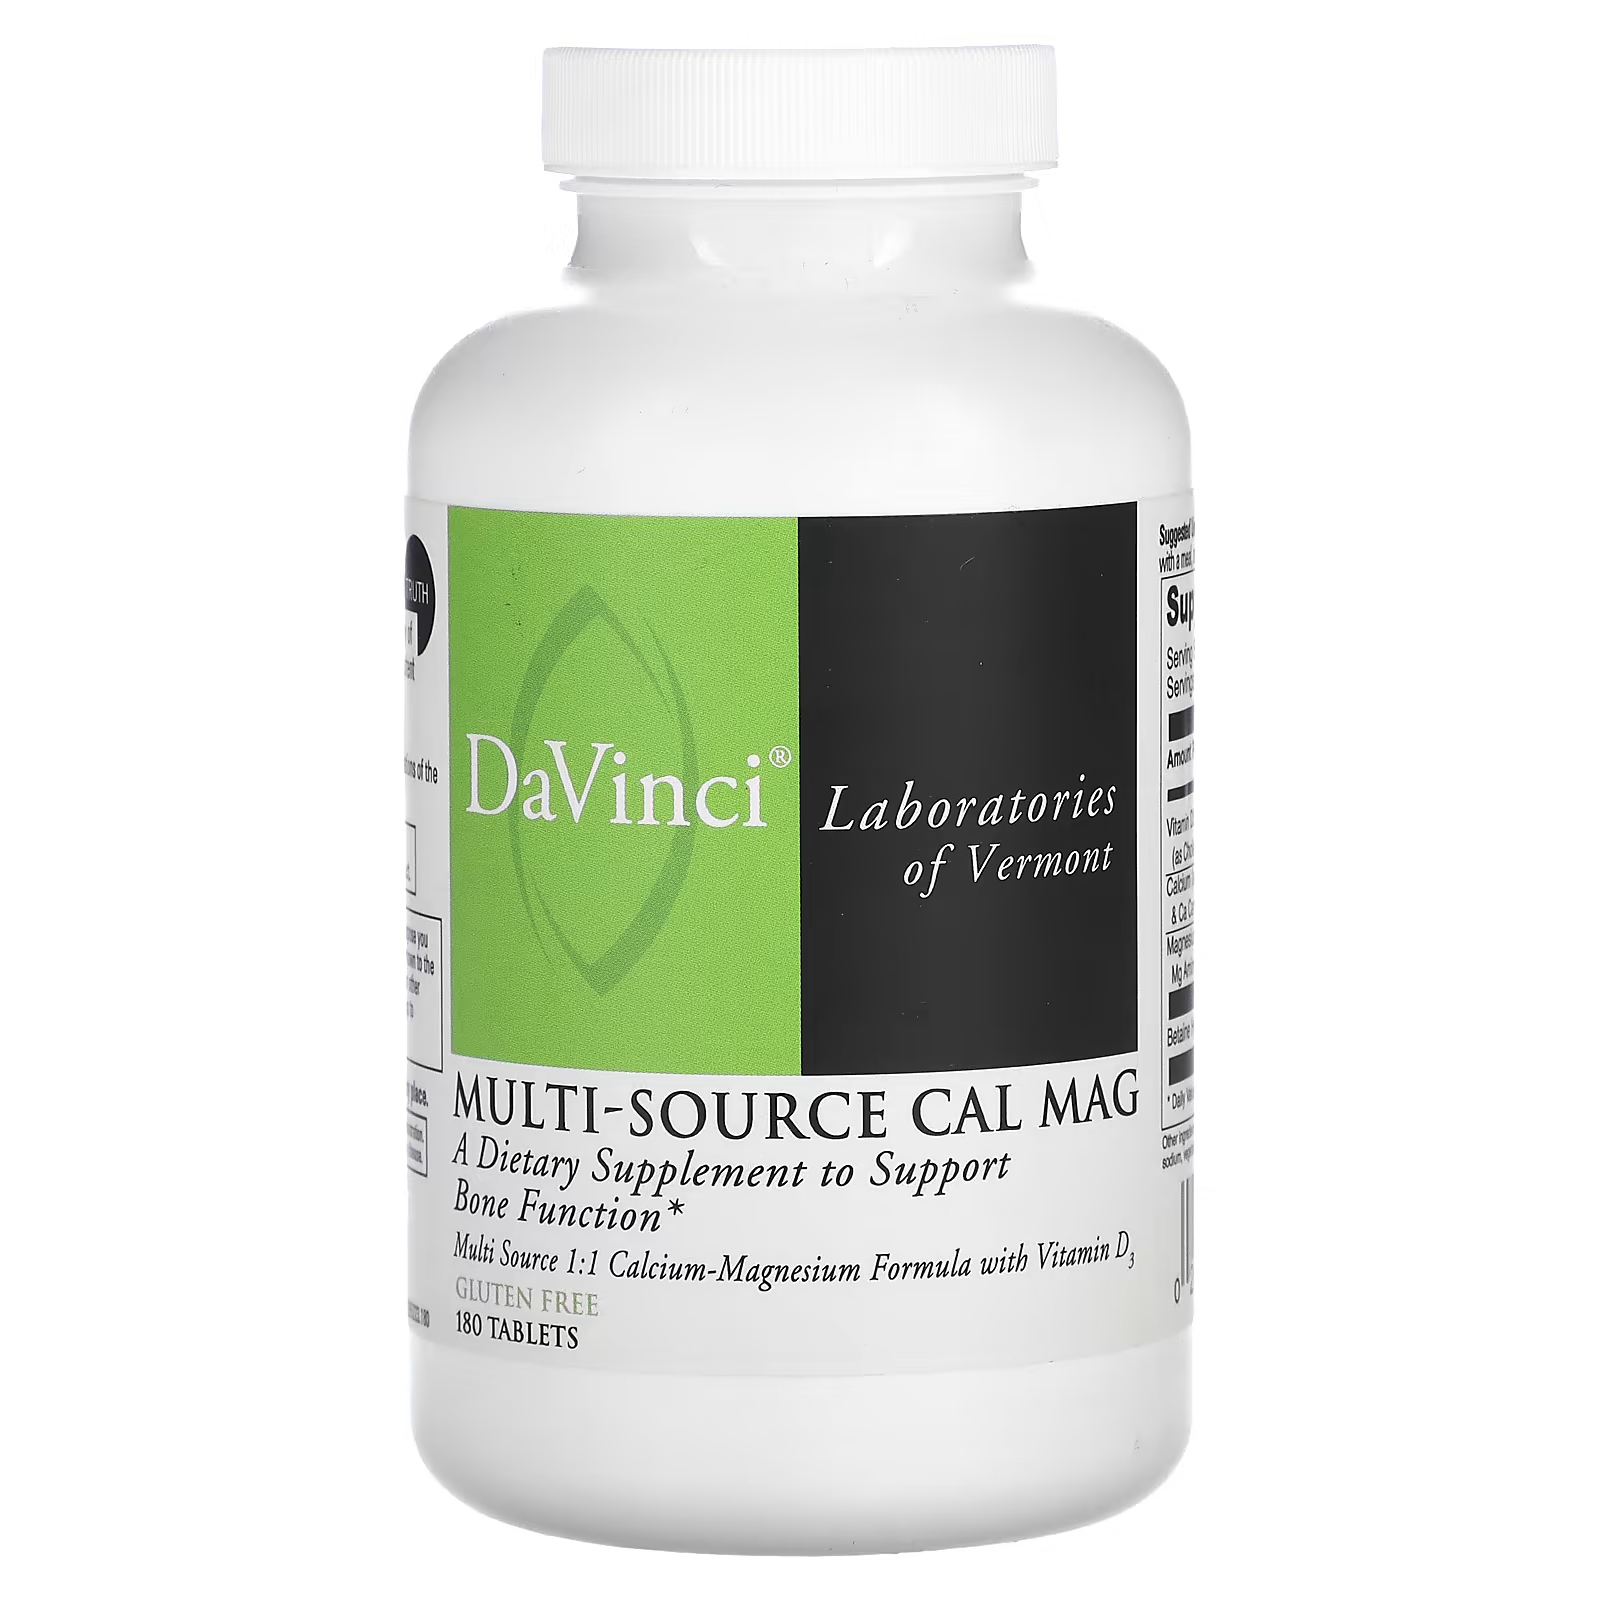 Пищевая добавка DaVinci Laboratories of Vermont Multi-Source Cal Mag, 180 таблеток пищевая добавка zand для иммунитета с цинком и витамином d3 60 таблеток